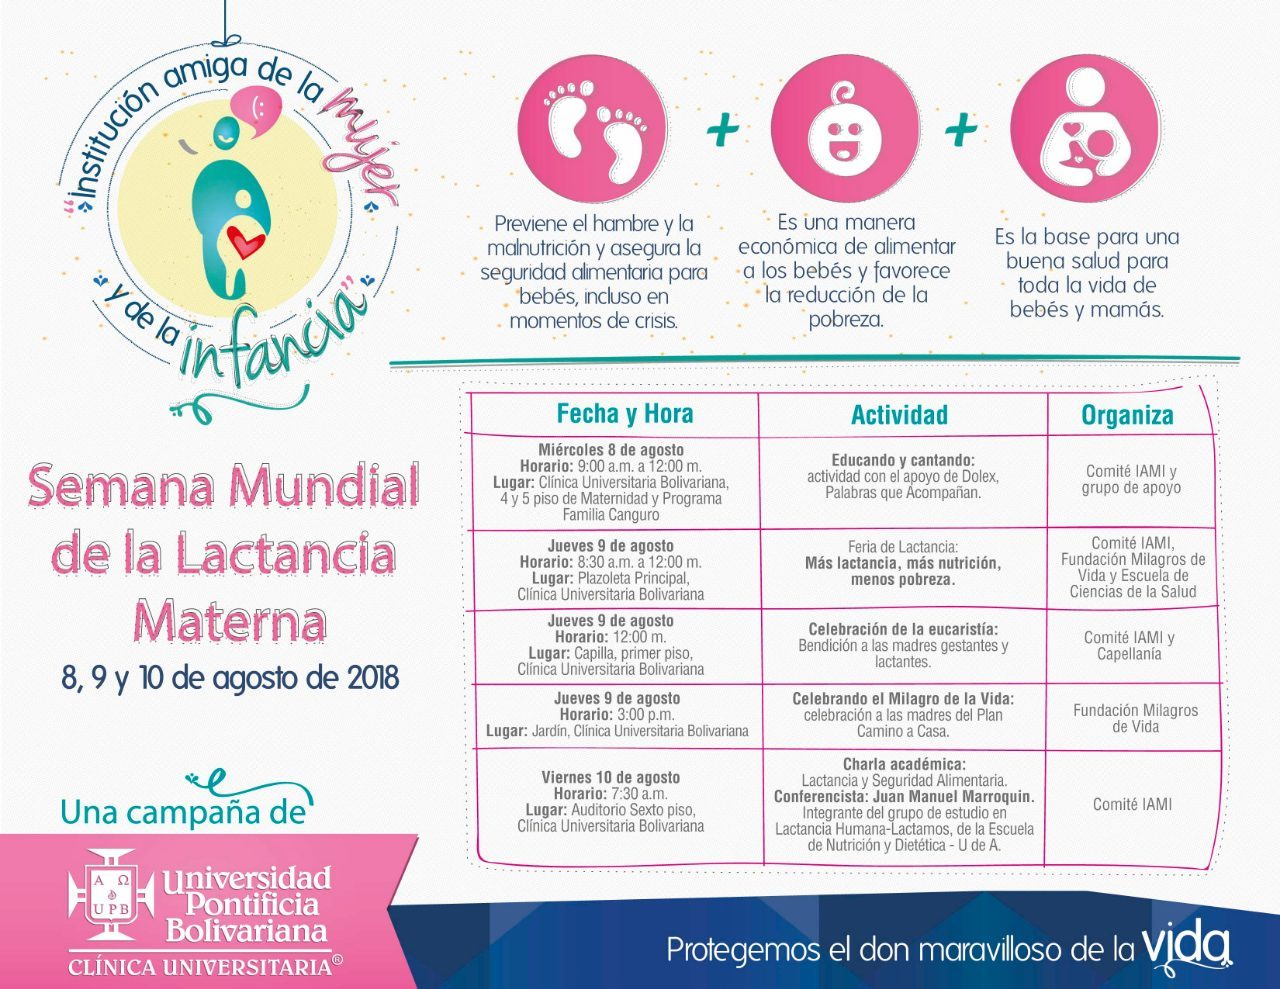 Sada Mansedumbre Malgastar Clínica Universitaria Bolivariana - Nos unimos a la Semana Mundial de la Lactancia  Materna: Lactancia Materna + Leche + Nutrición – Pobreza.